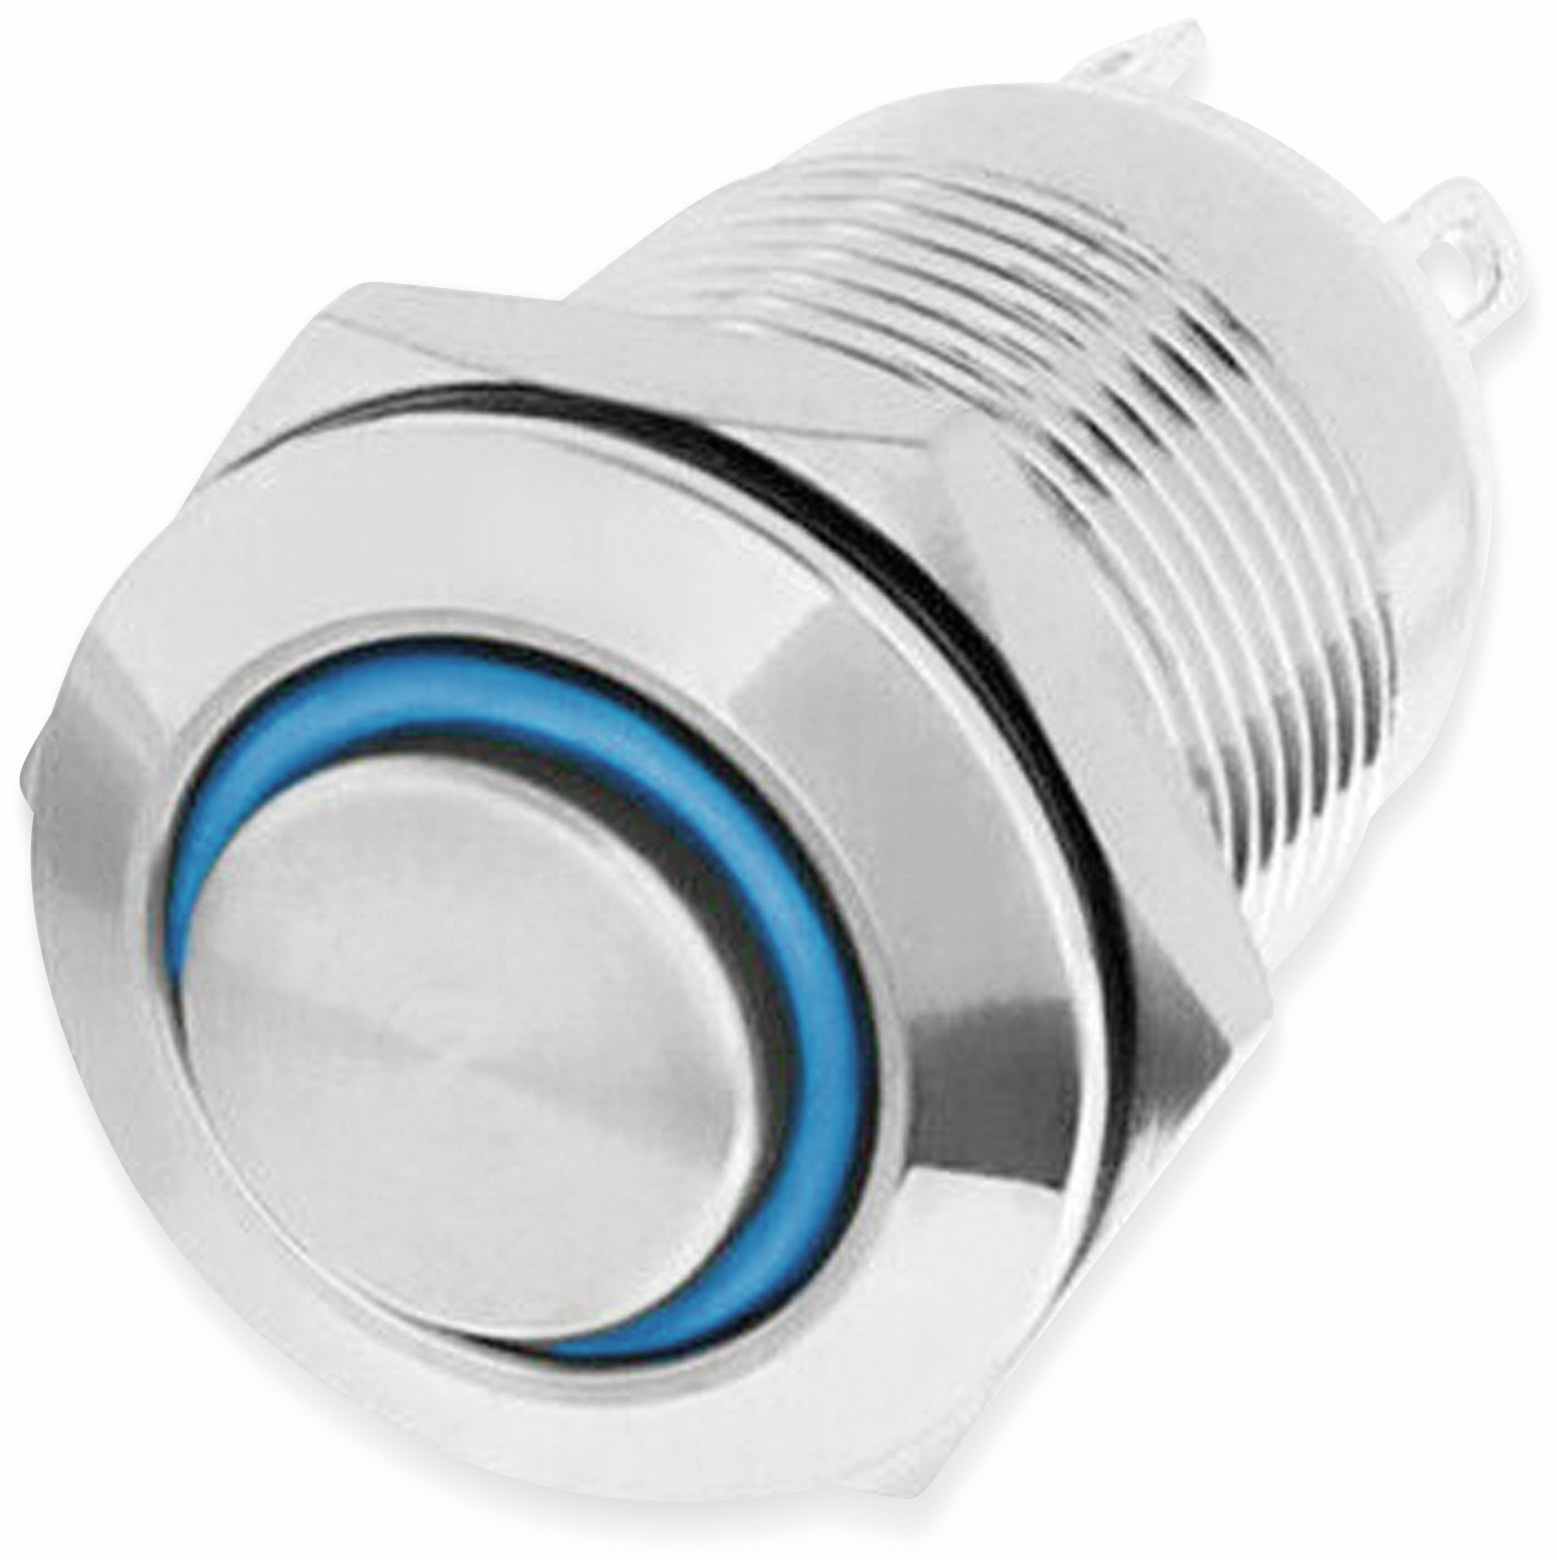 LED-Druckschalter, Ringbeleuchtung blau 12 V, Ø12 mm, 2 A/48 V